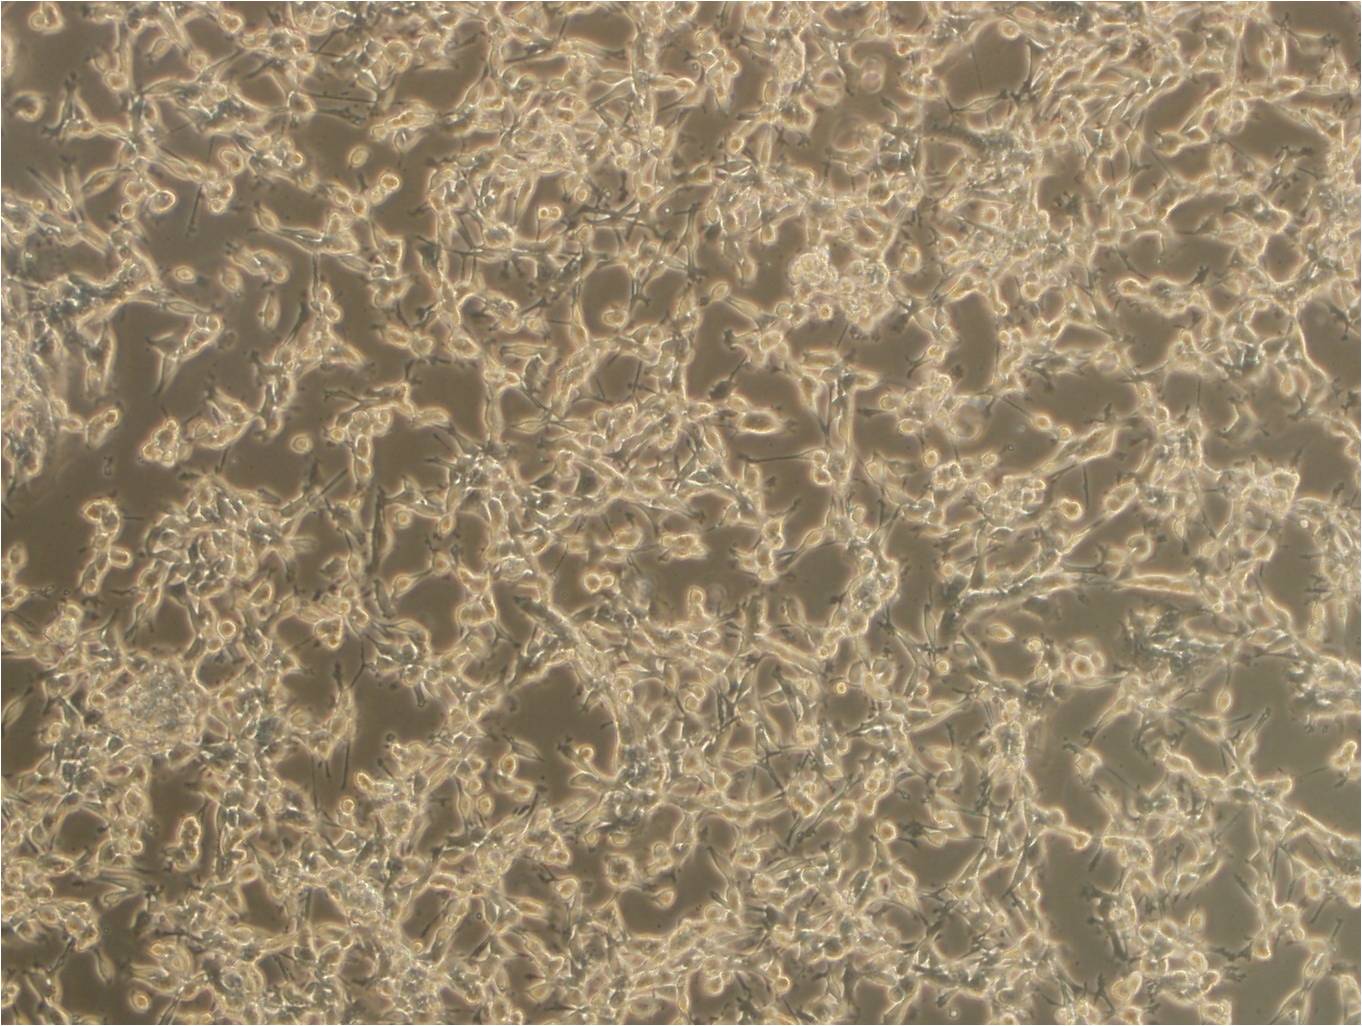 M20 [Human melanoma] Cells|人胚胎皮肤细胞系,M20 [Human melanoma] Cells